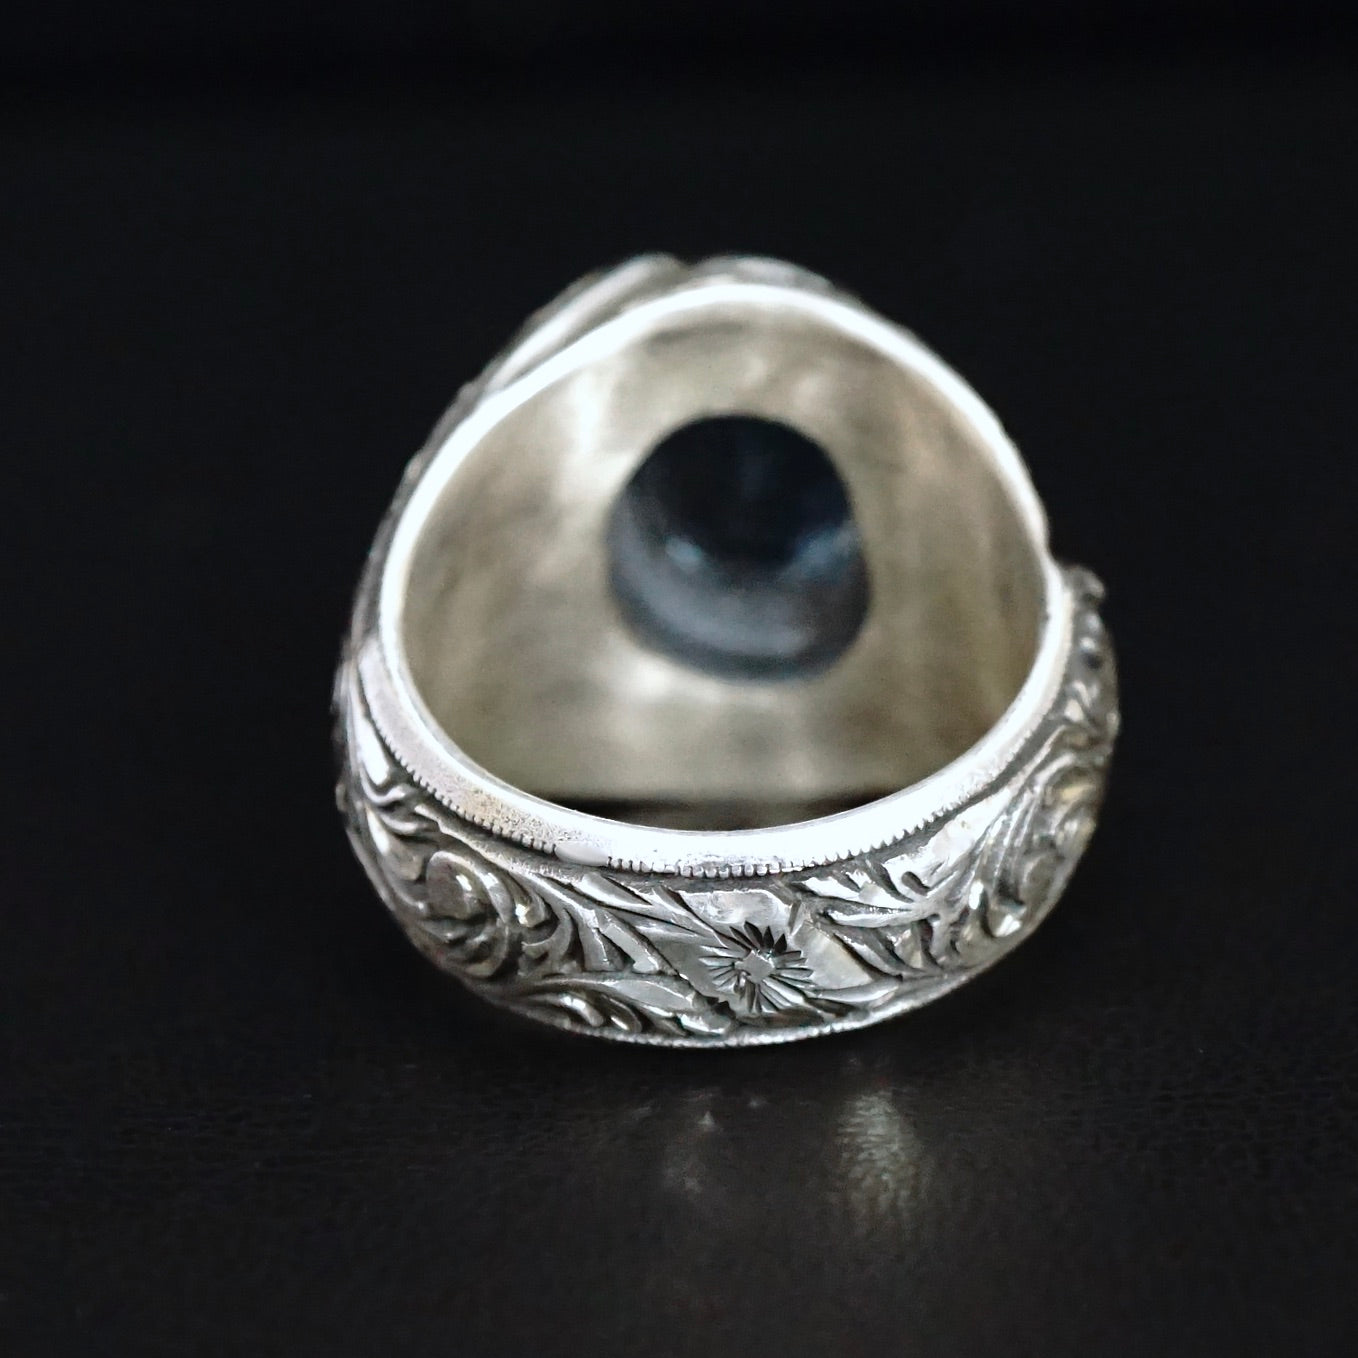 Ring Aquamarine Sterling Silver Handmade gemstone Artisan Handcrafted Unique Men’s Jewelry